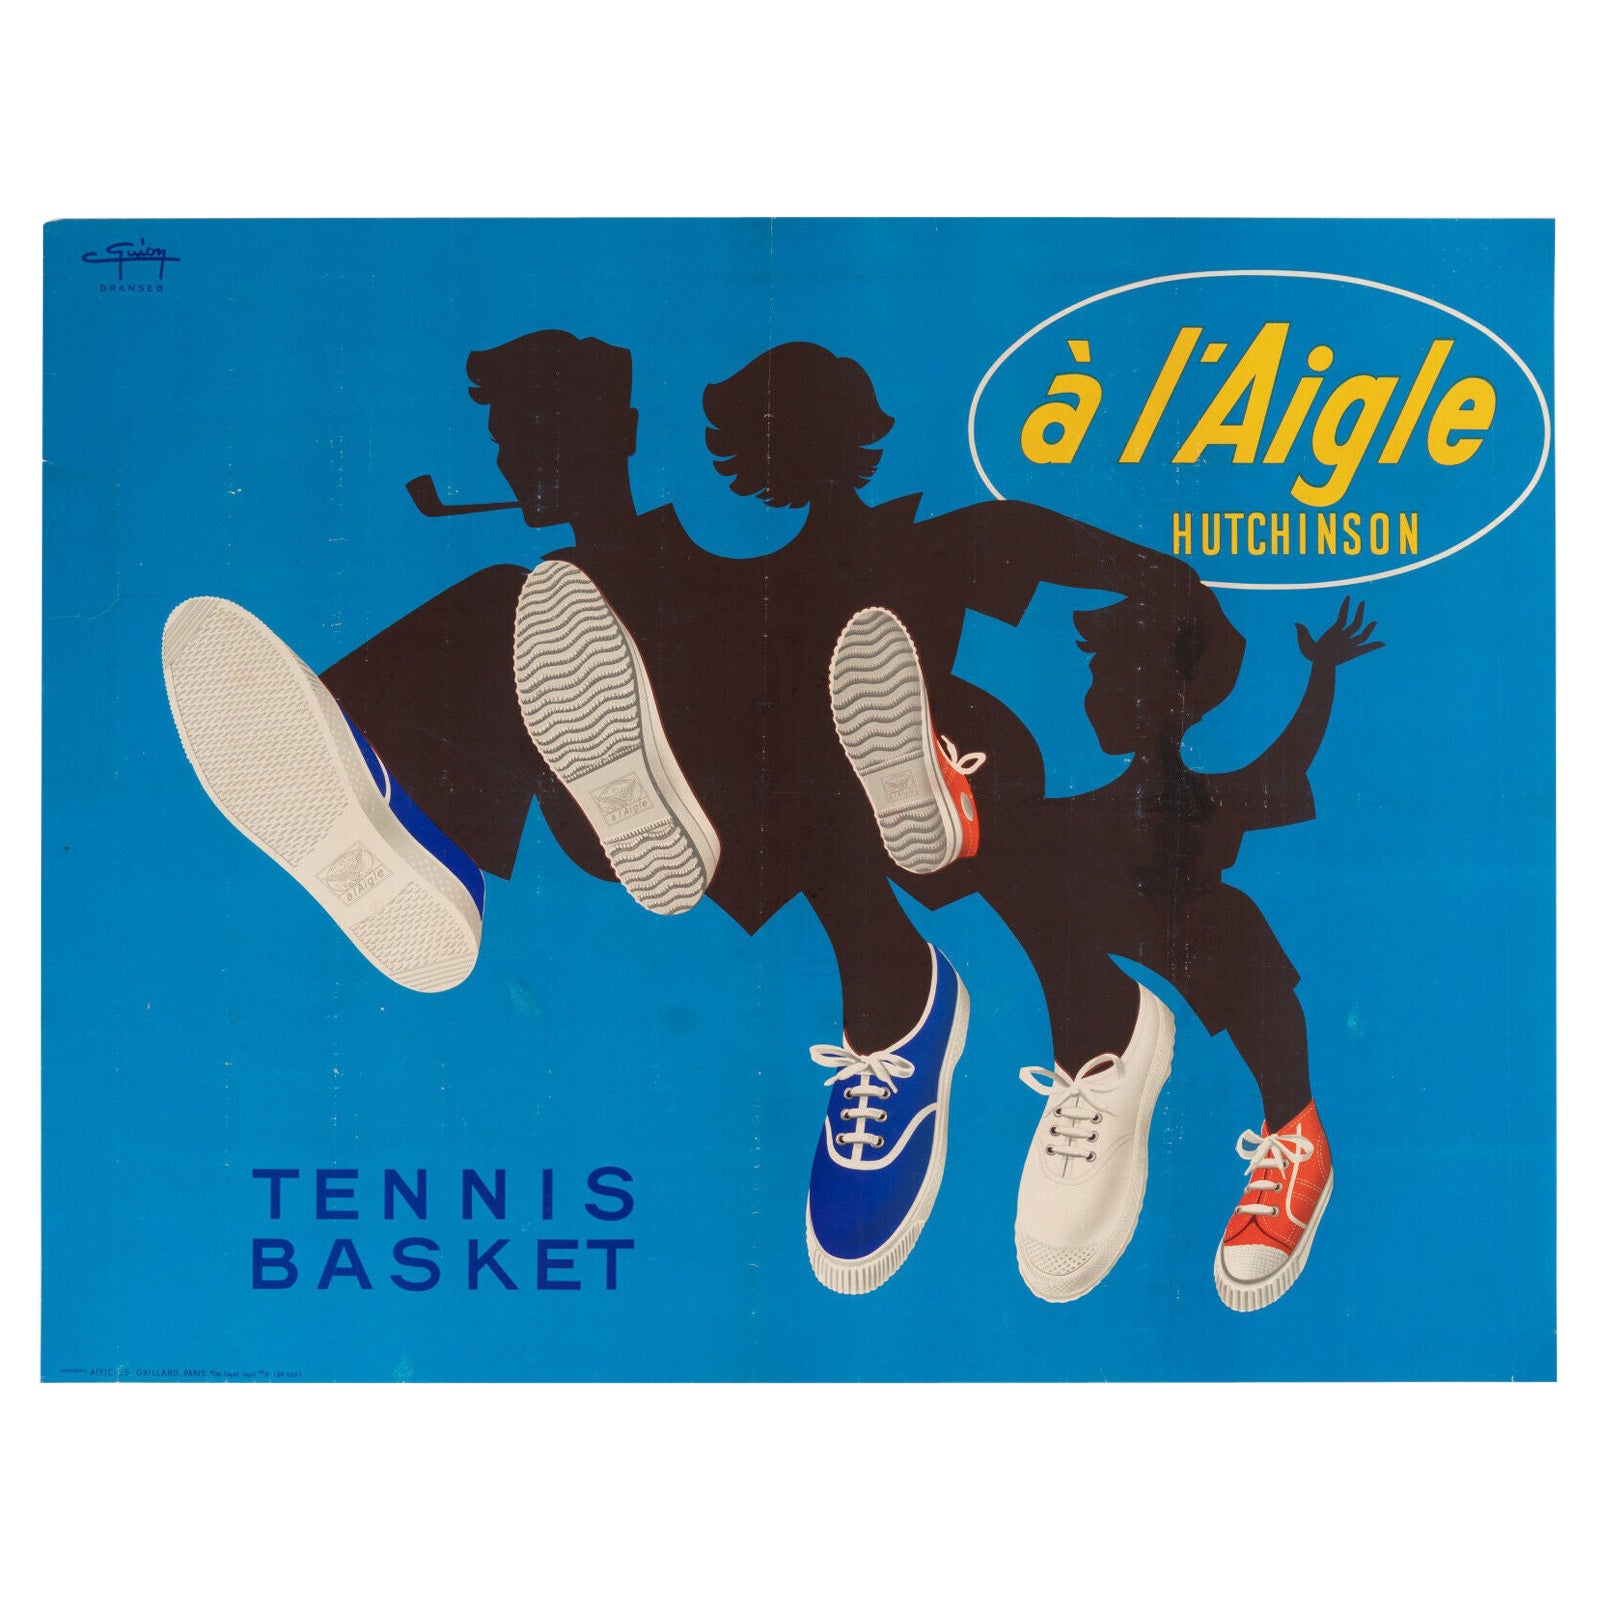 Original Vintage Poster, Hutchinson, Tennis, Basketball, Sneakers, 1950